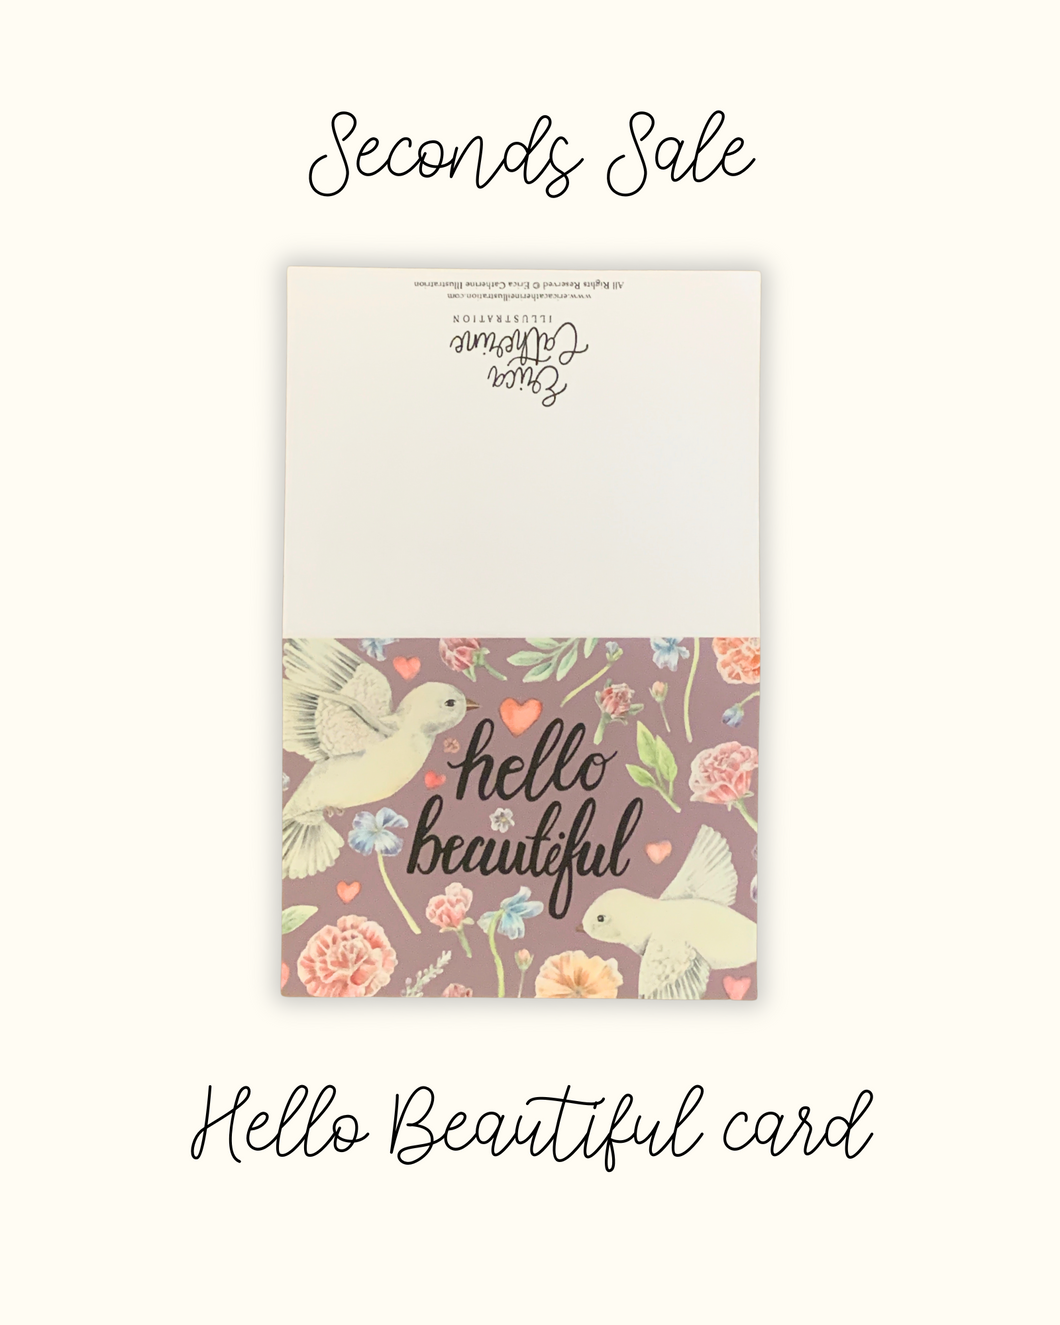 Hello Beautiful Card- Seconds Sale